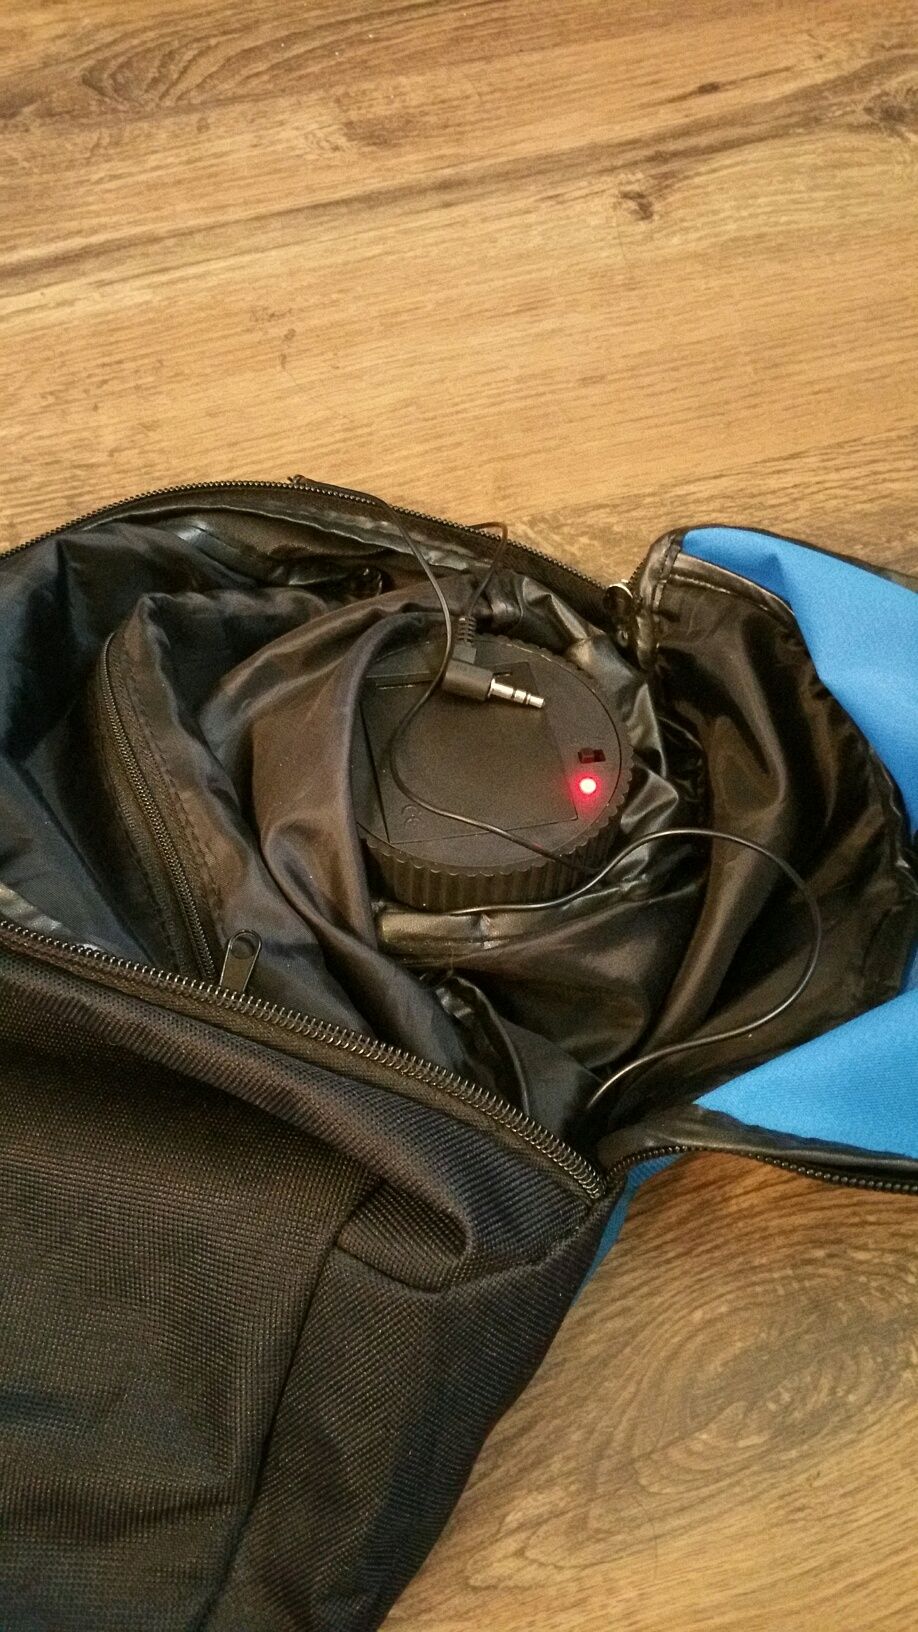 Plecak z głośnikami do MP3 i telefonu Panasonic na baterie